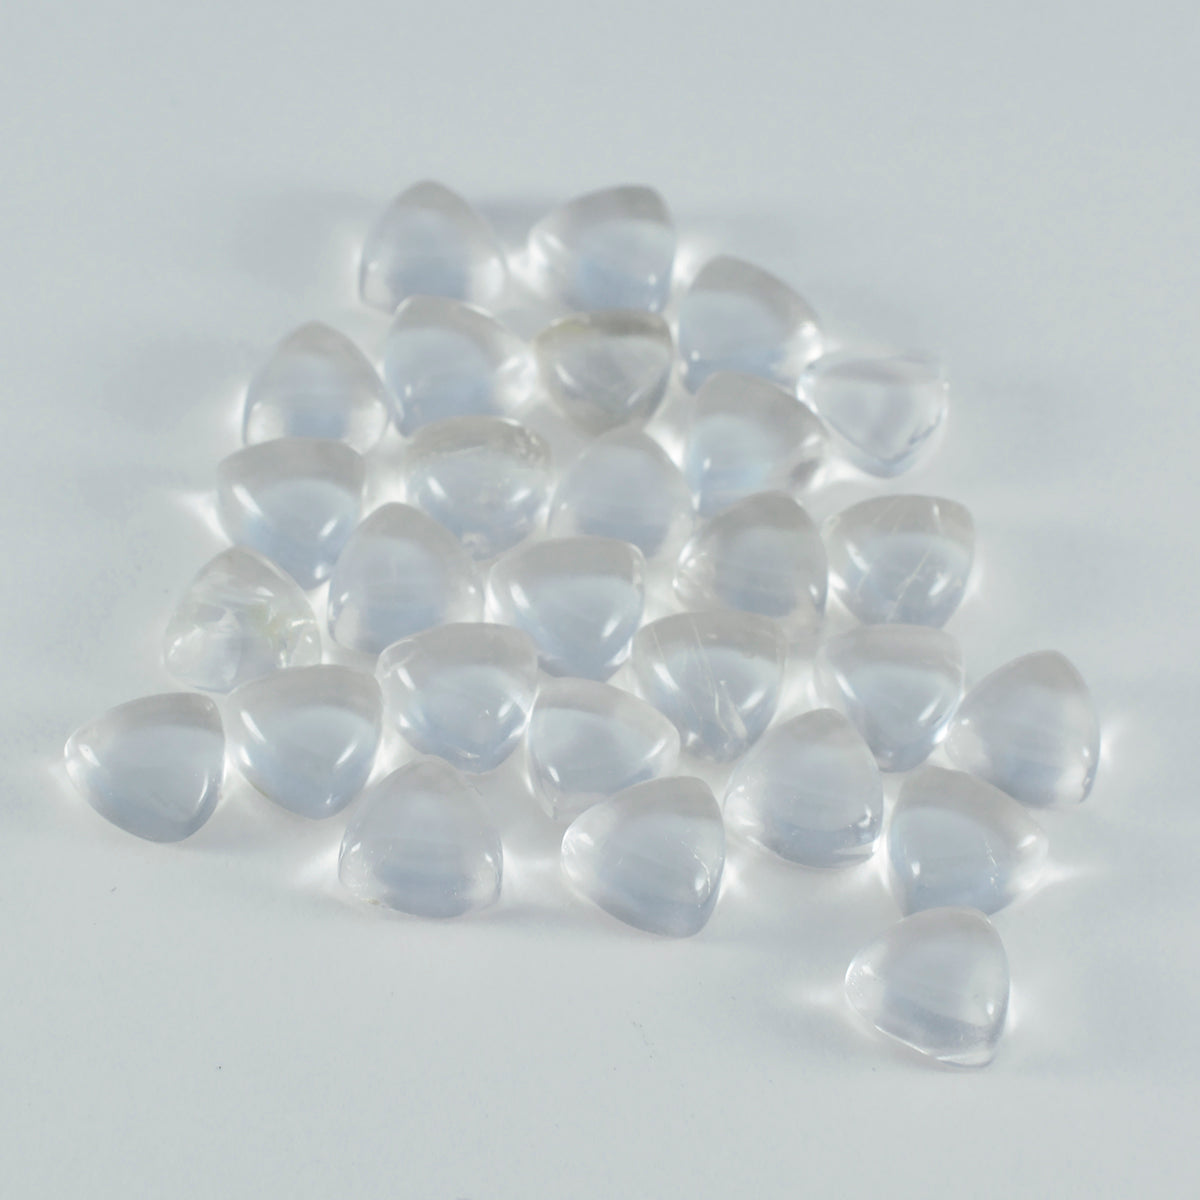 Riyogems 1PC White Crystal Quartz Cabochon 8x8 mm Trillion Shape wonderful Quality Stone